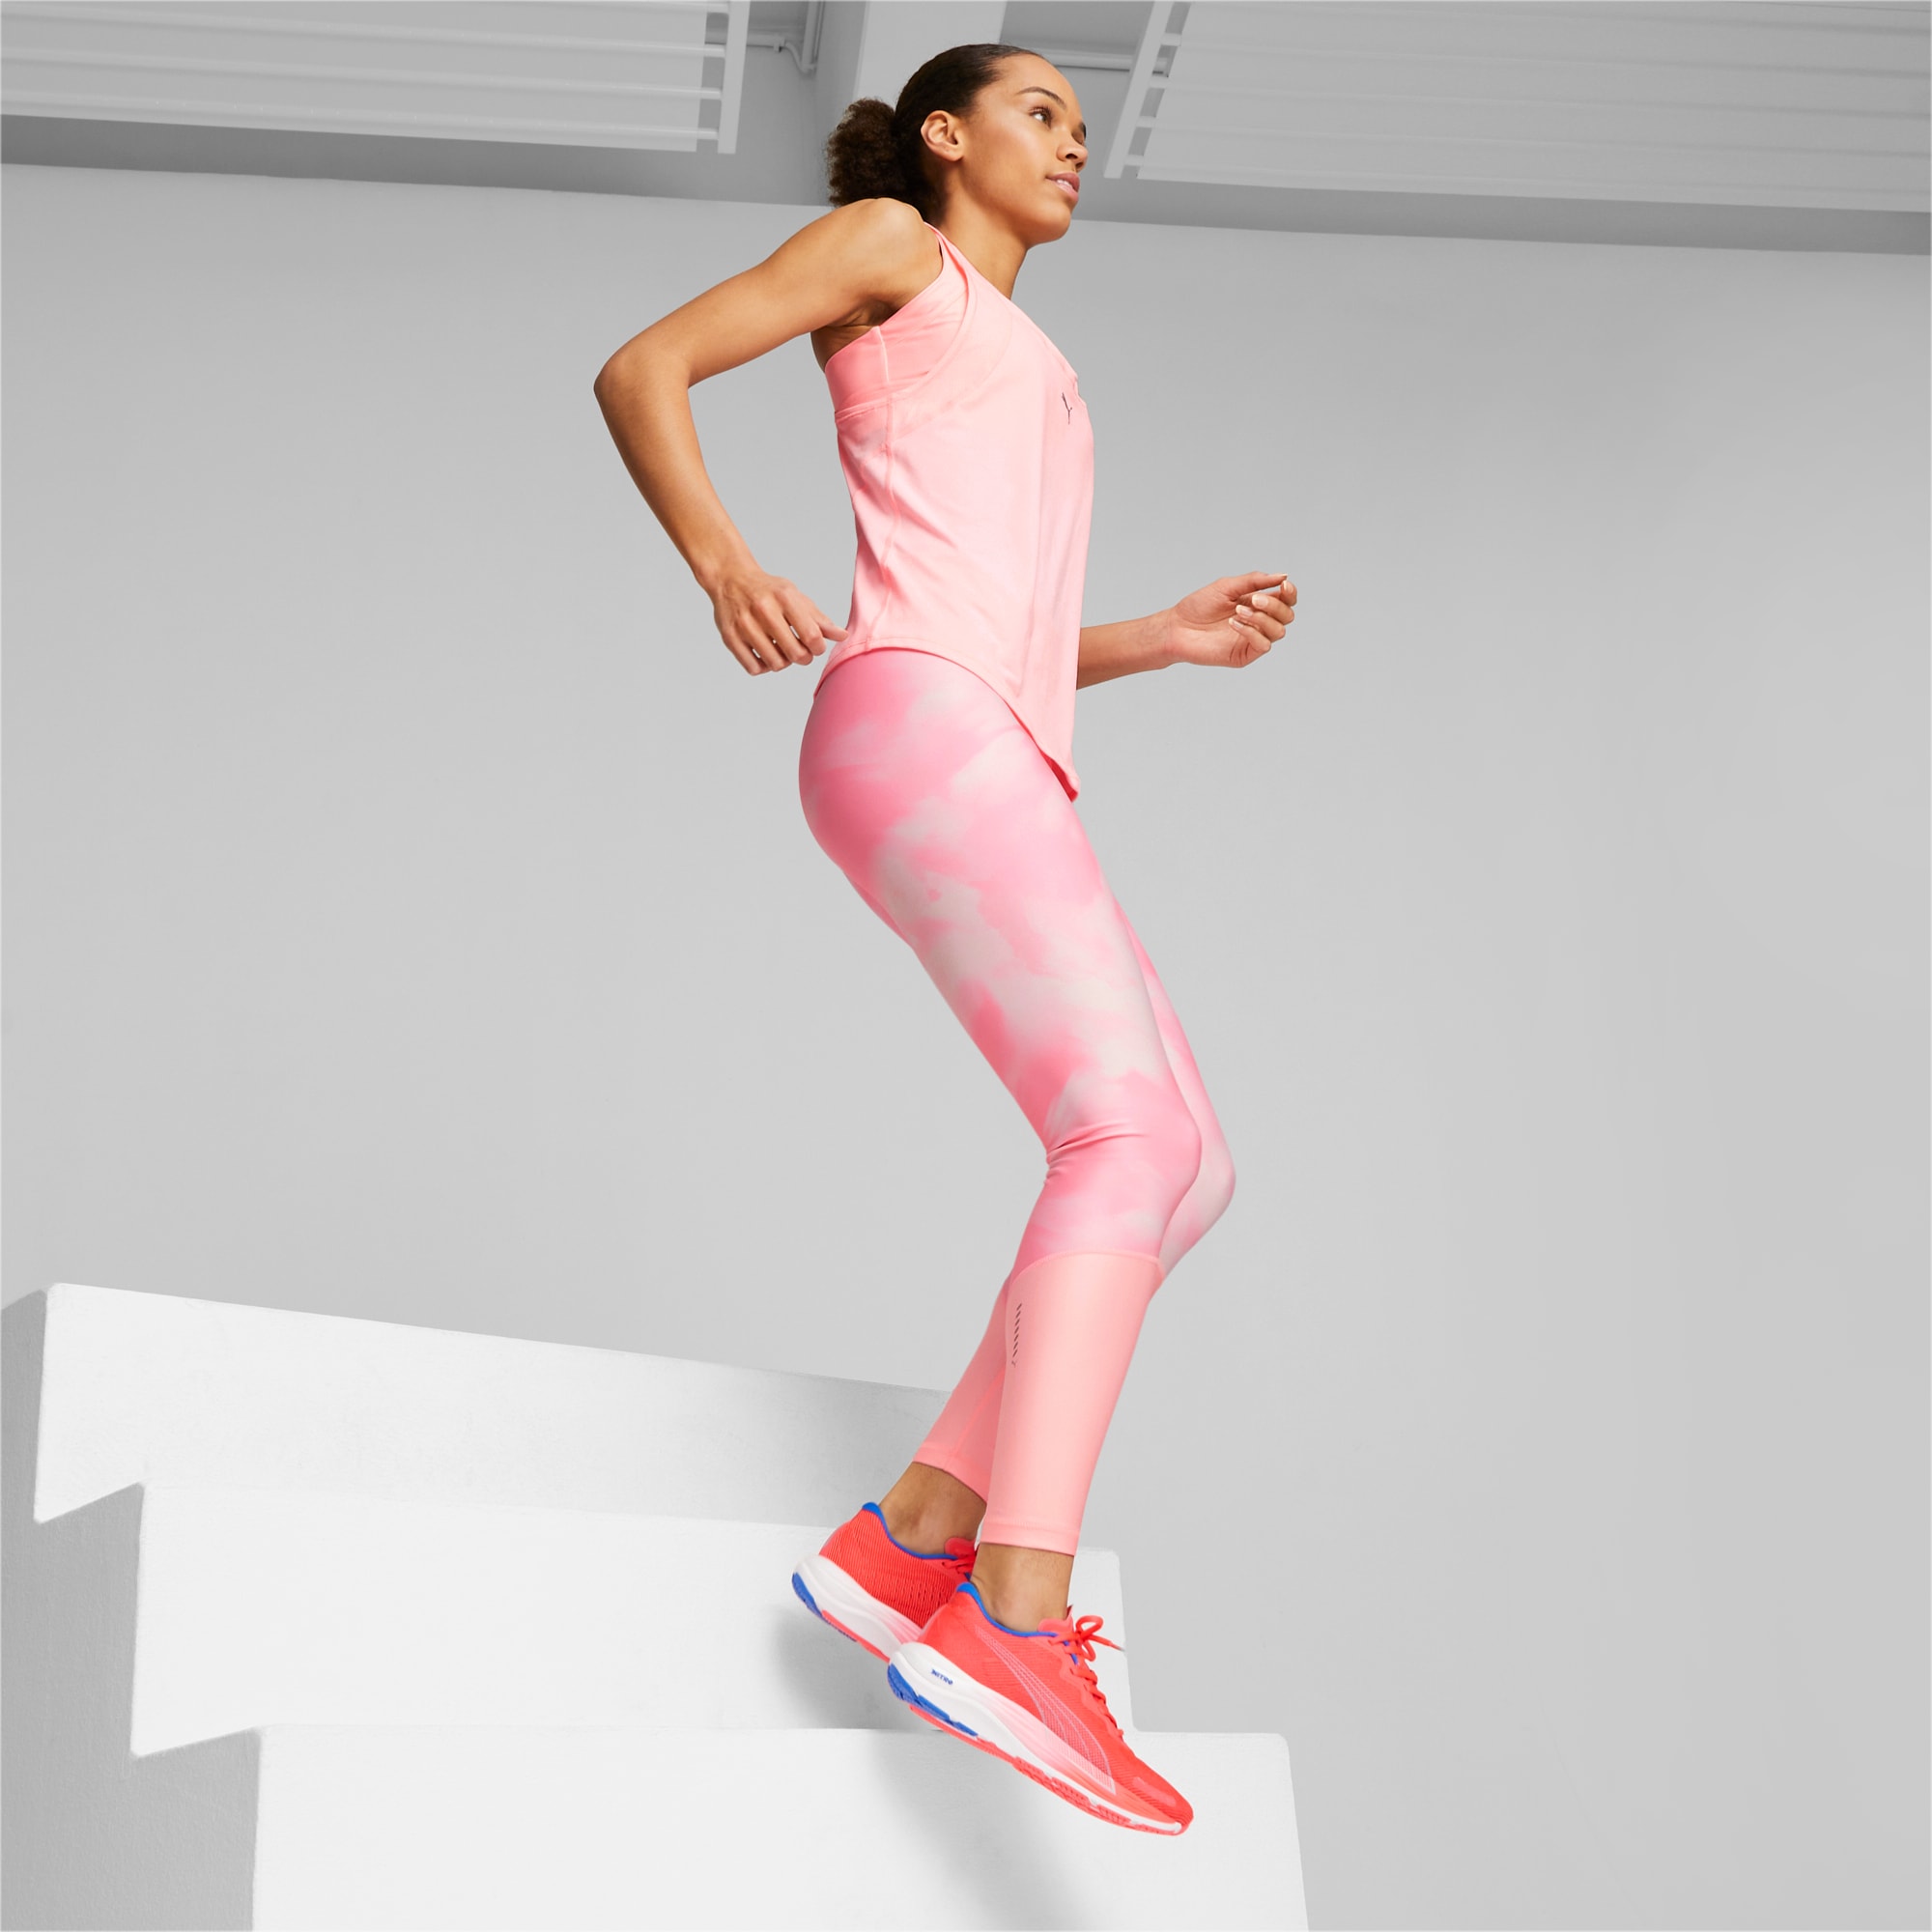 PUMA Zapatillas De Running Para Mujer Velocity Nitro 2, Azul/Rosado/Rojo